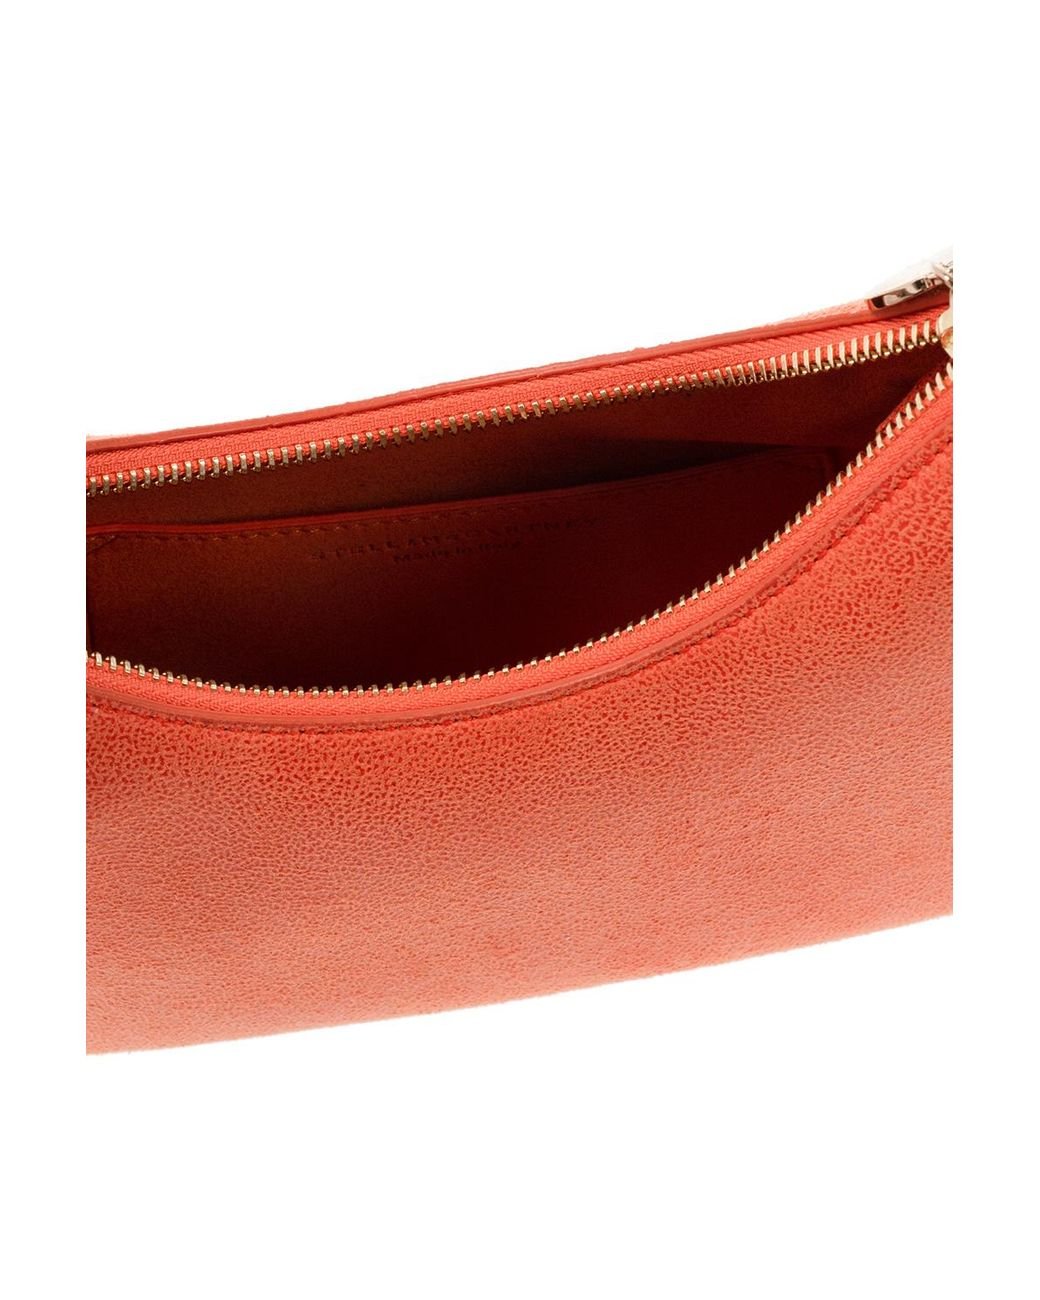 Stella McCartney 'falabella Zip Mini' Shoulder Bag in Orange | Lyst